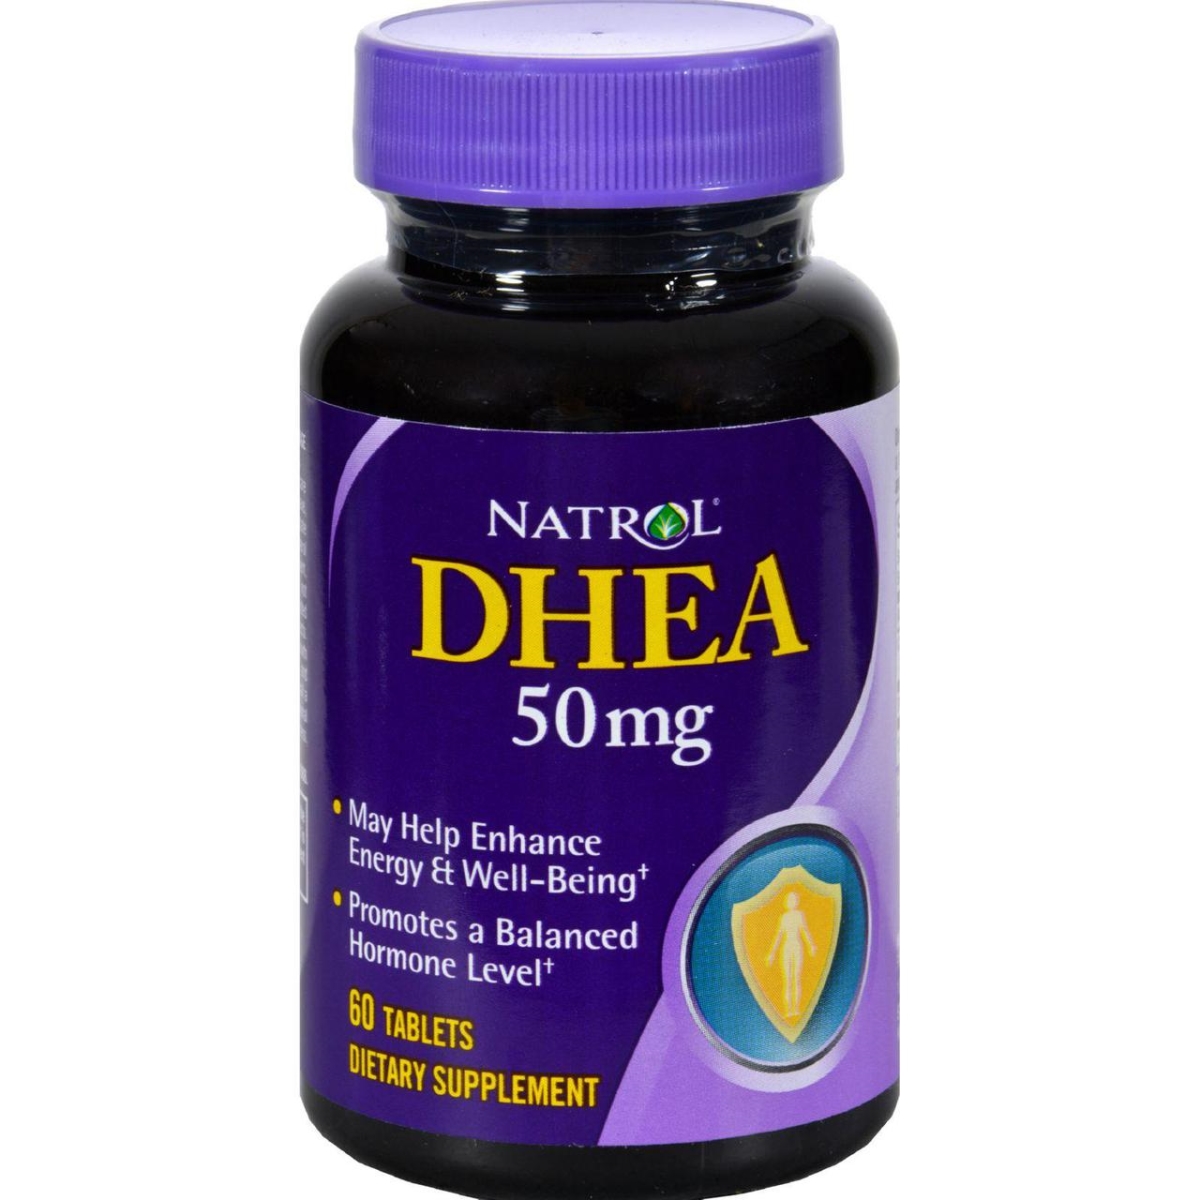 Hg0645333 50 Mg Dhea - 60 Tablets